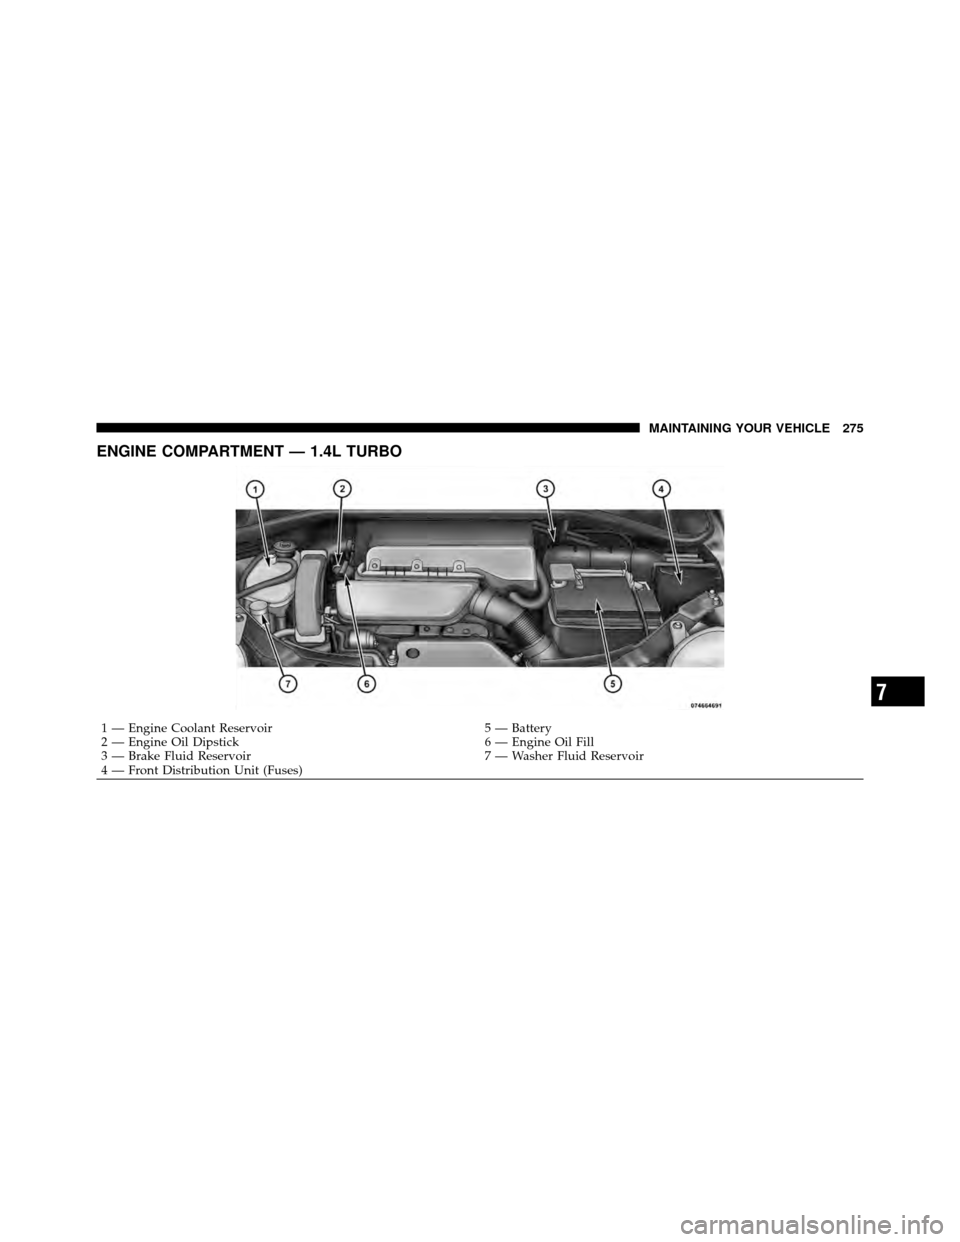 FIAT 500 ABARTH 2012 2.G Owners Manual ENGINE COMPARTMENT — 1.4L TURBO
1 — Engine Coolant Reservoir5 — Battery
2 — Engine Oil Dipstick 6 — Engine Oil Fill
3 — Brake Fluid Reservoir 7 — Washer Fluid Reservoir
4 — Front Distr